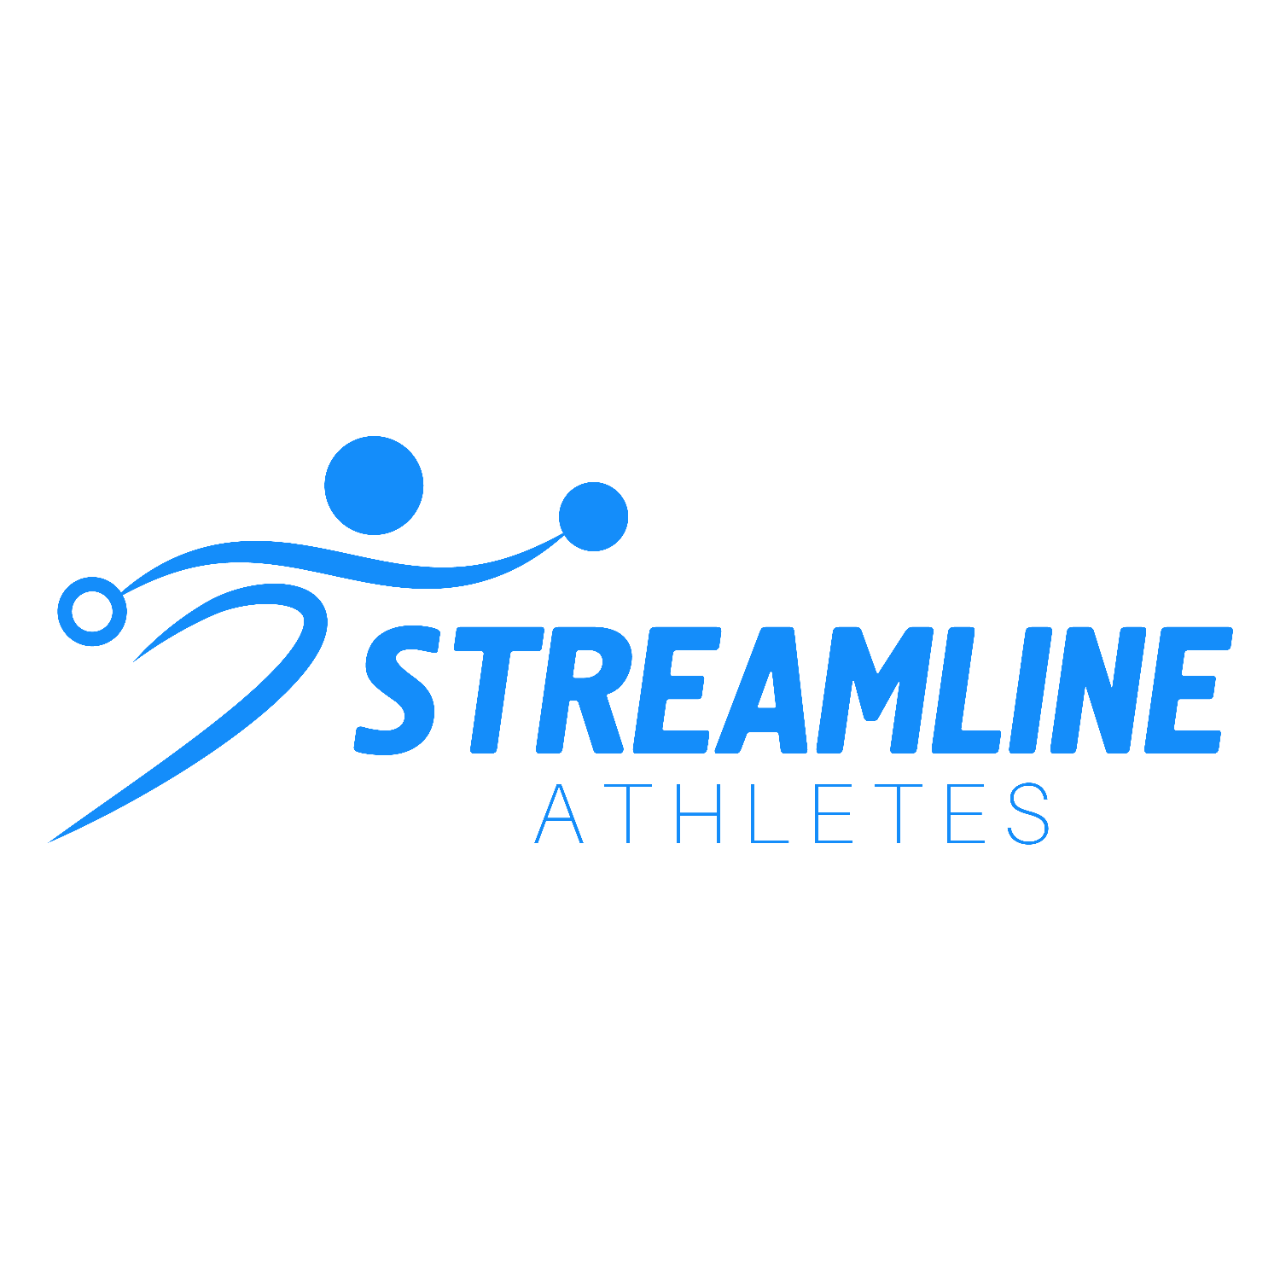 Streamline Athletes